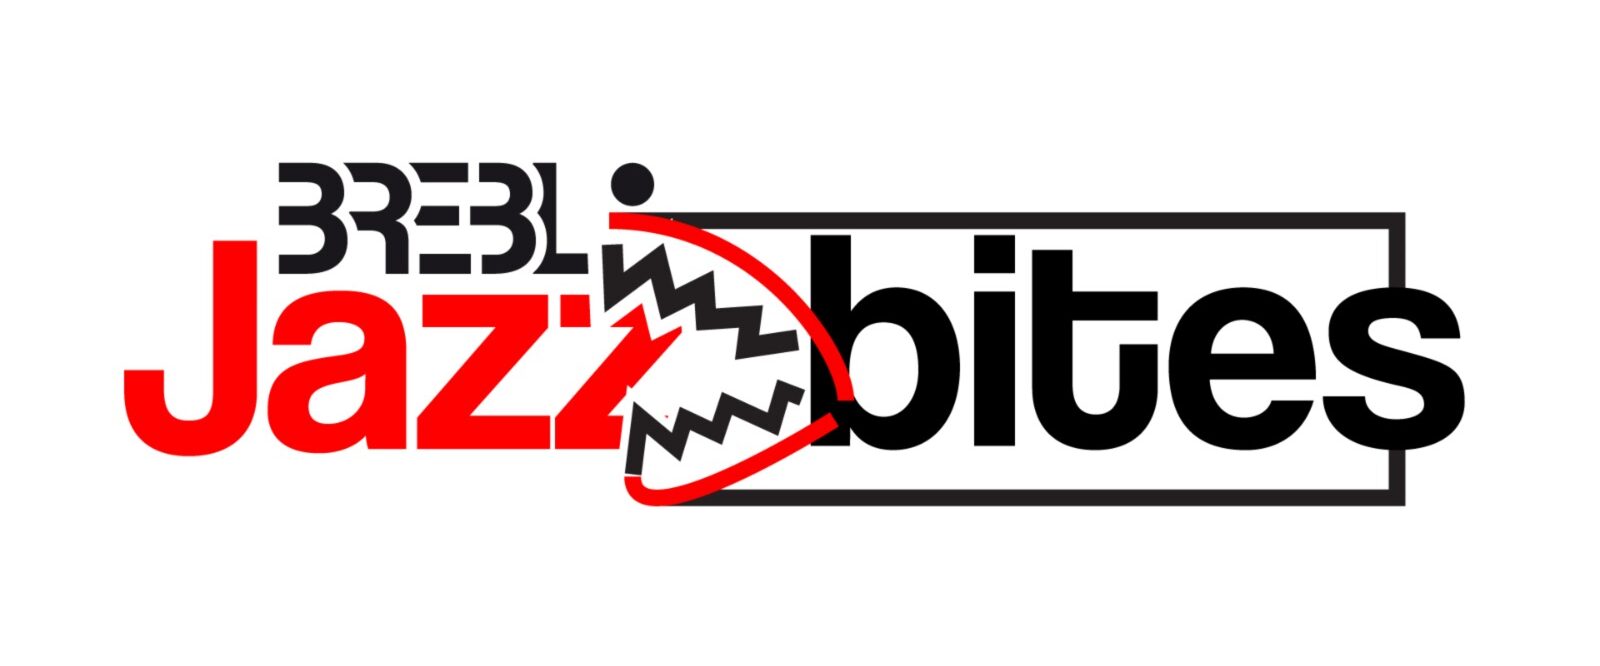 JazzBites | Band8 Collective 1